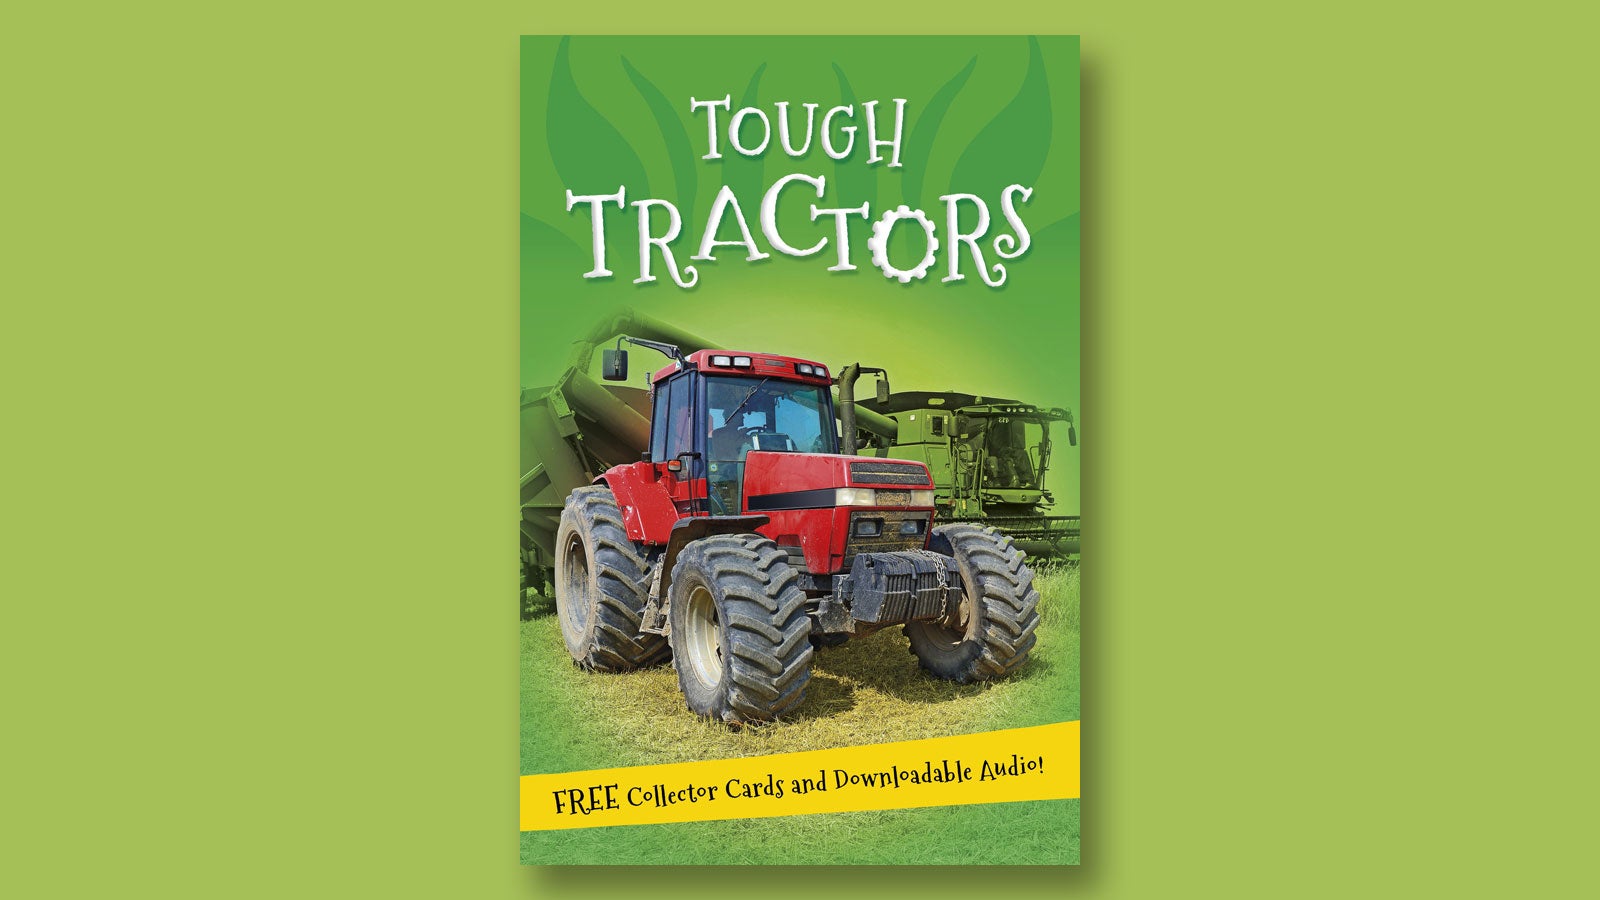 Tough Tractors book cover